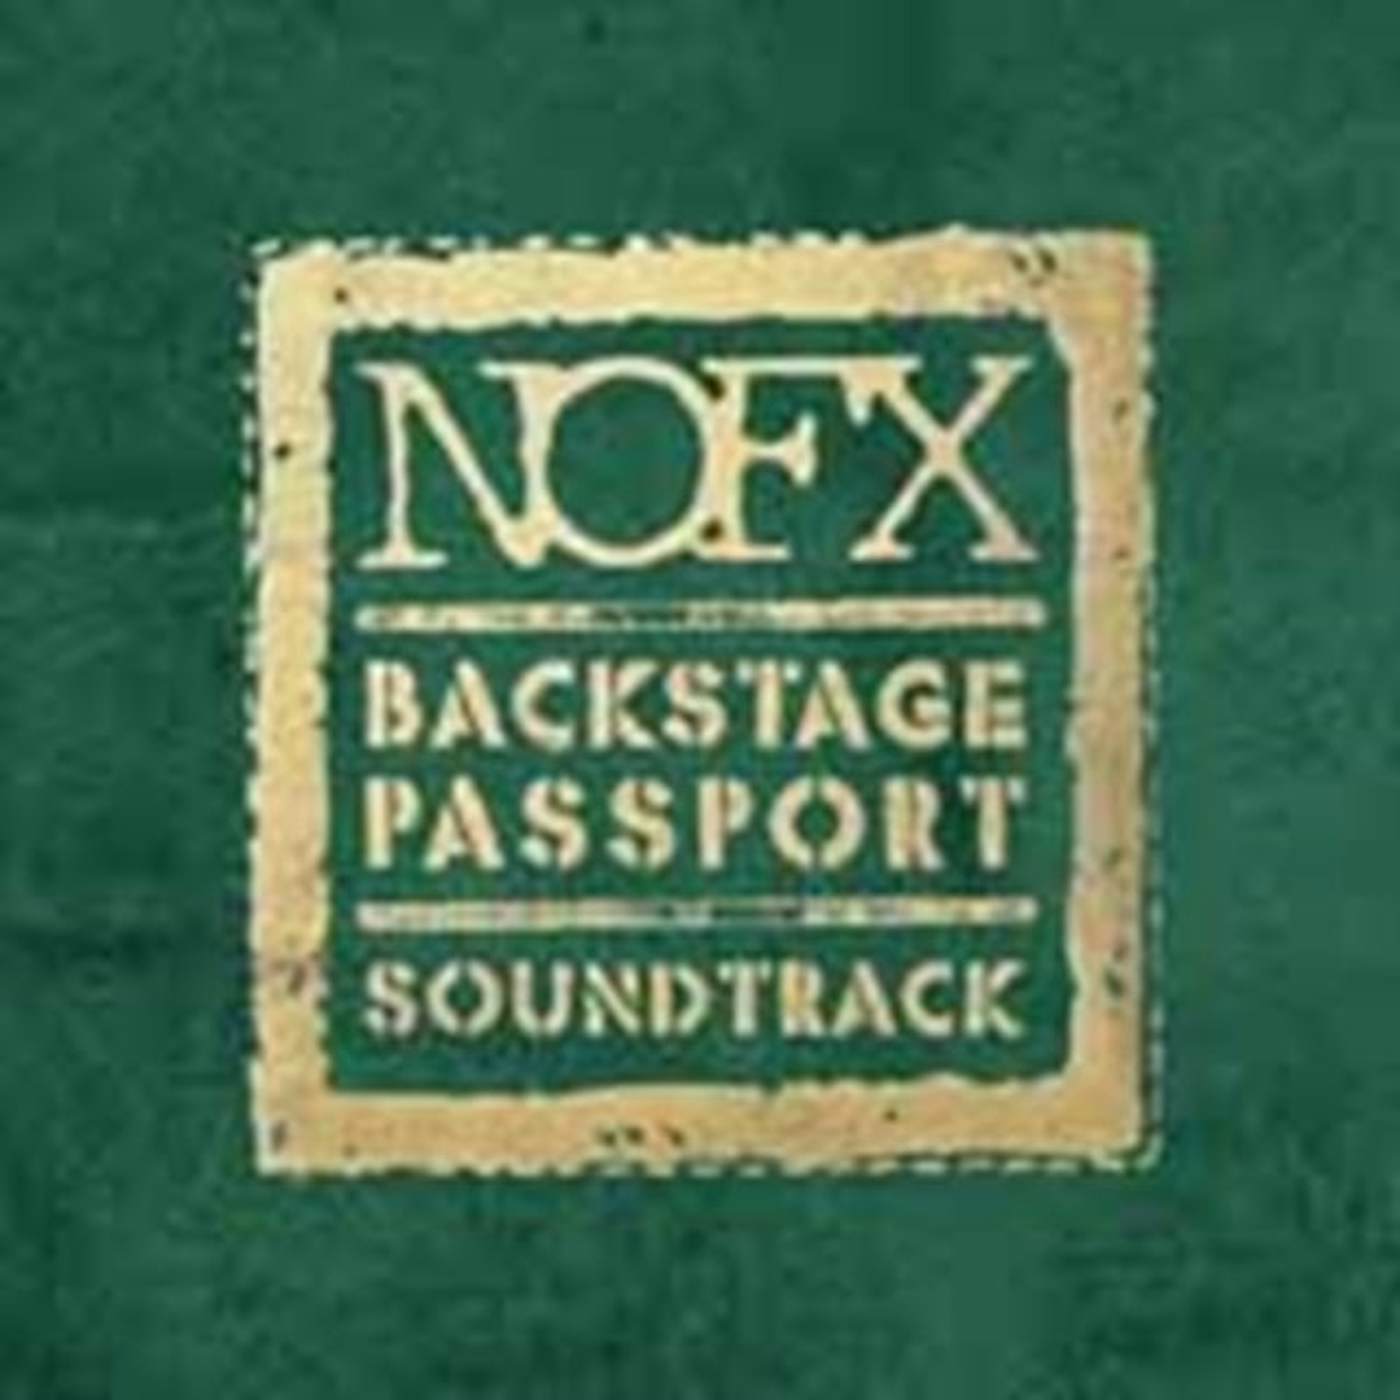 Nofx CD - Backstage Passport Soundtrack